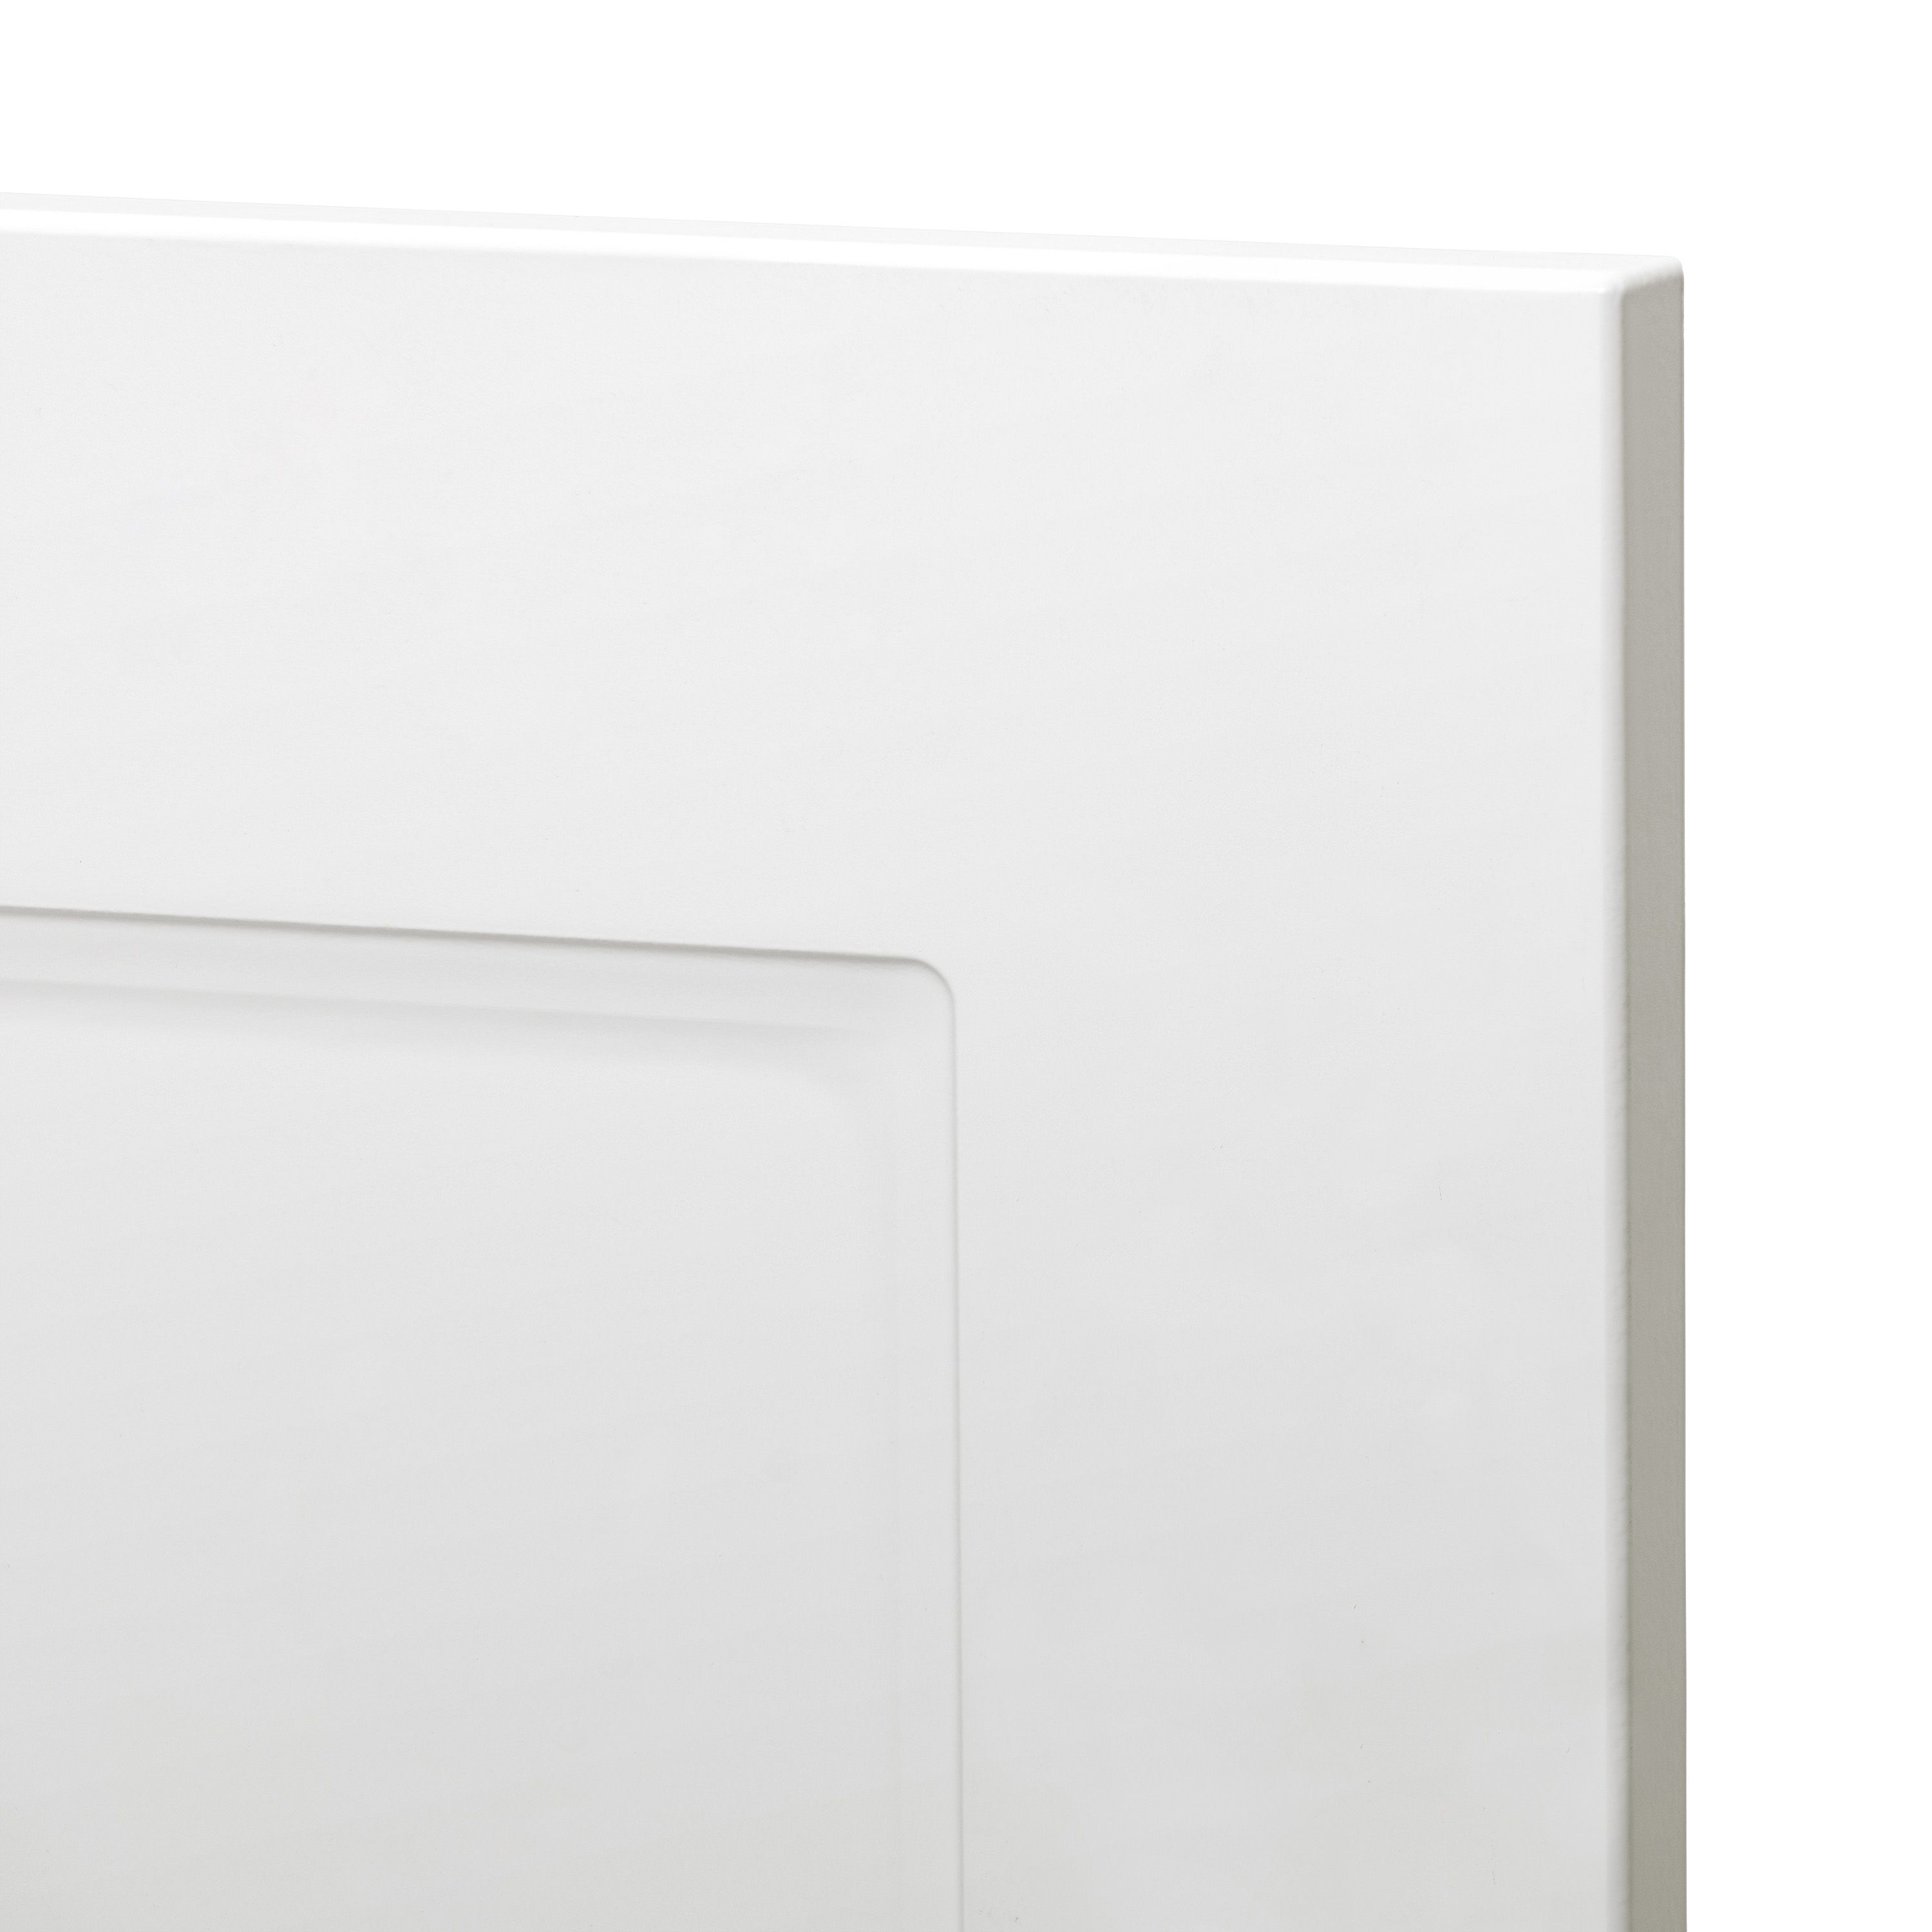 GoodHome Artemisia Matt white classic shaker Highline Cabinet door (W)450mm (H)715mm (T)18mm